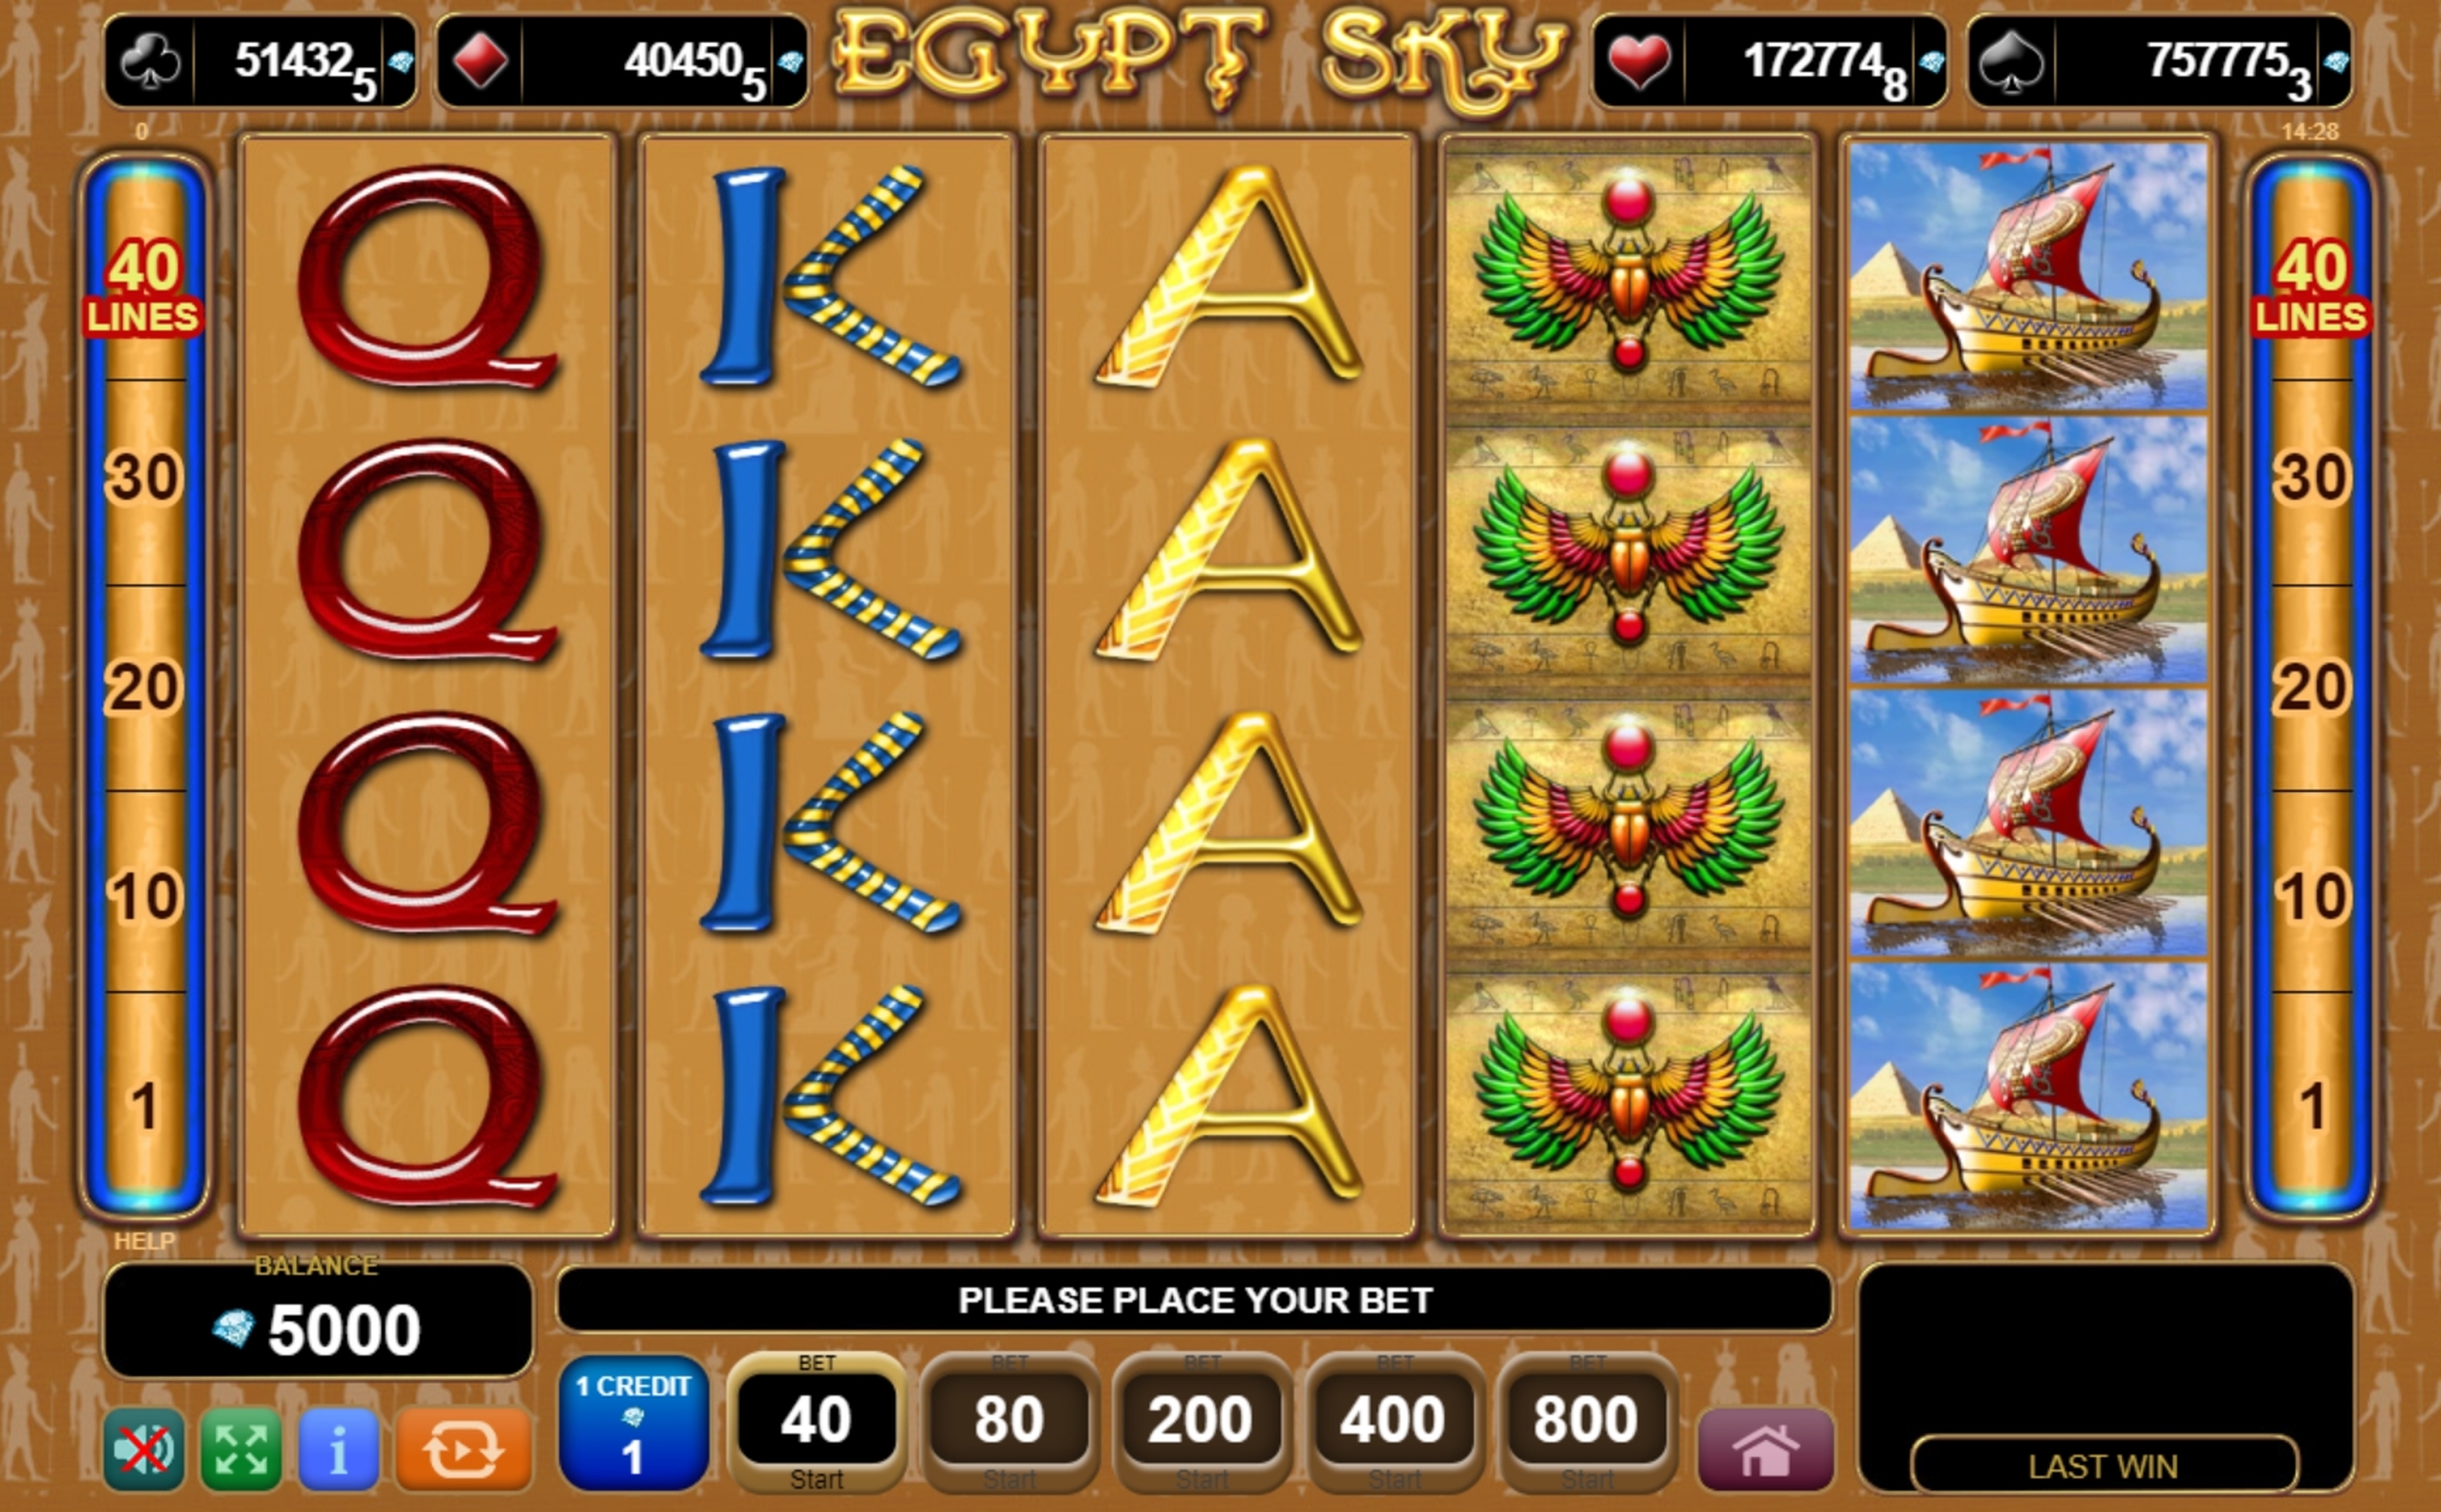 Reels in Egypt Sky Slot Game by EGT